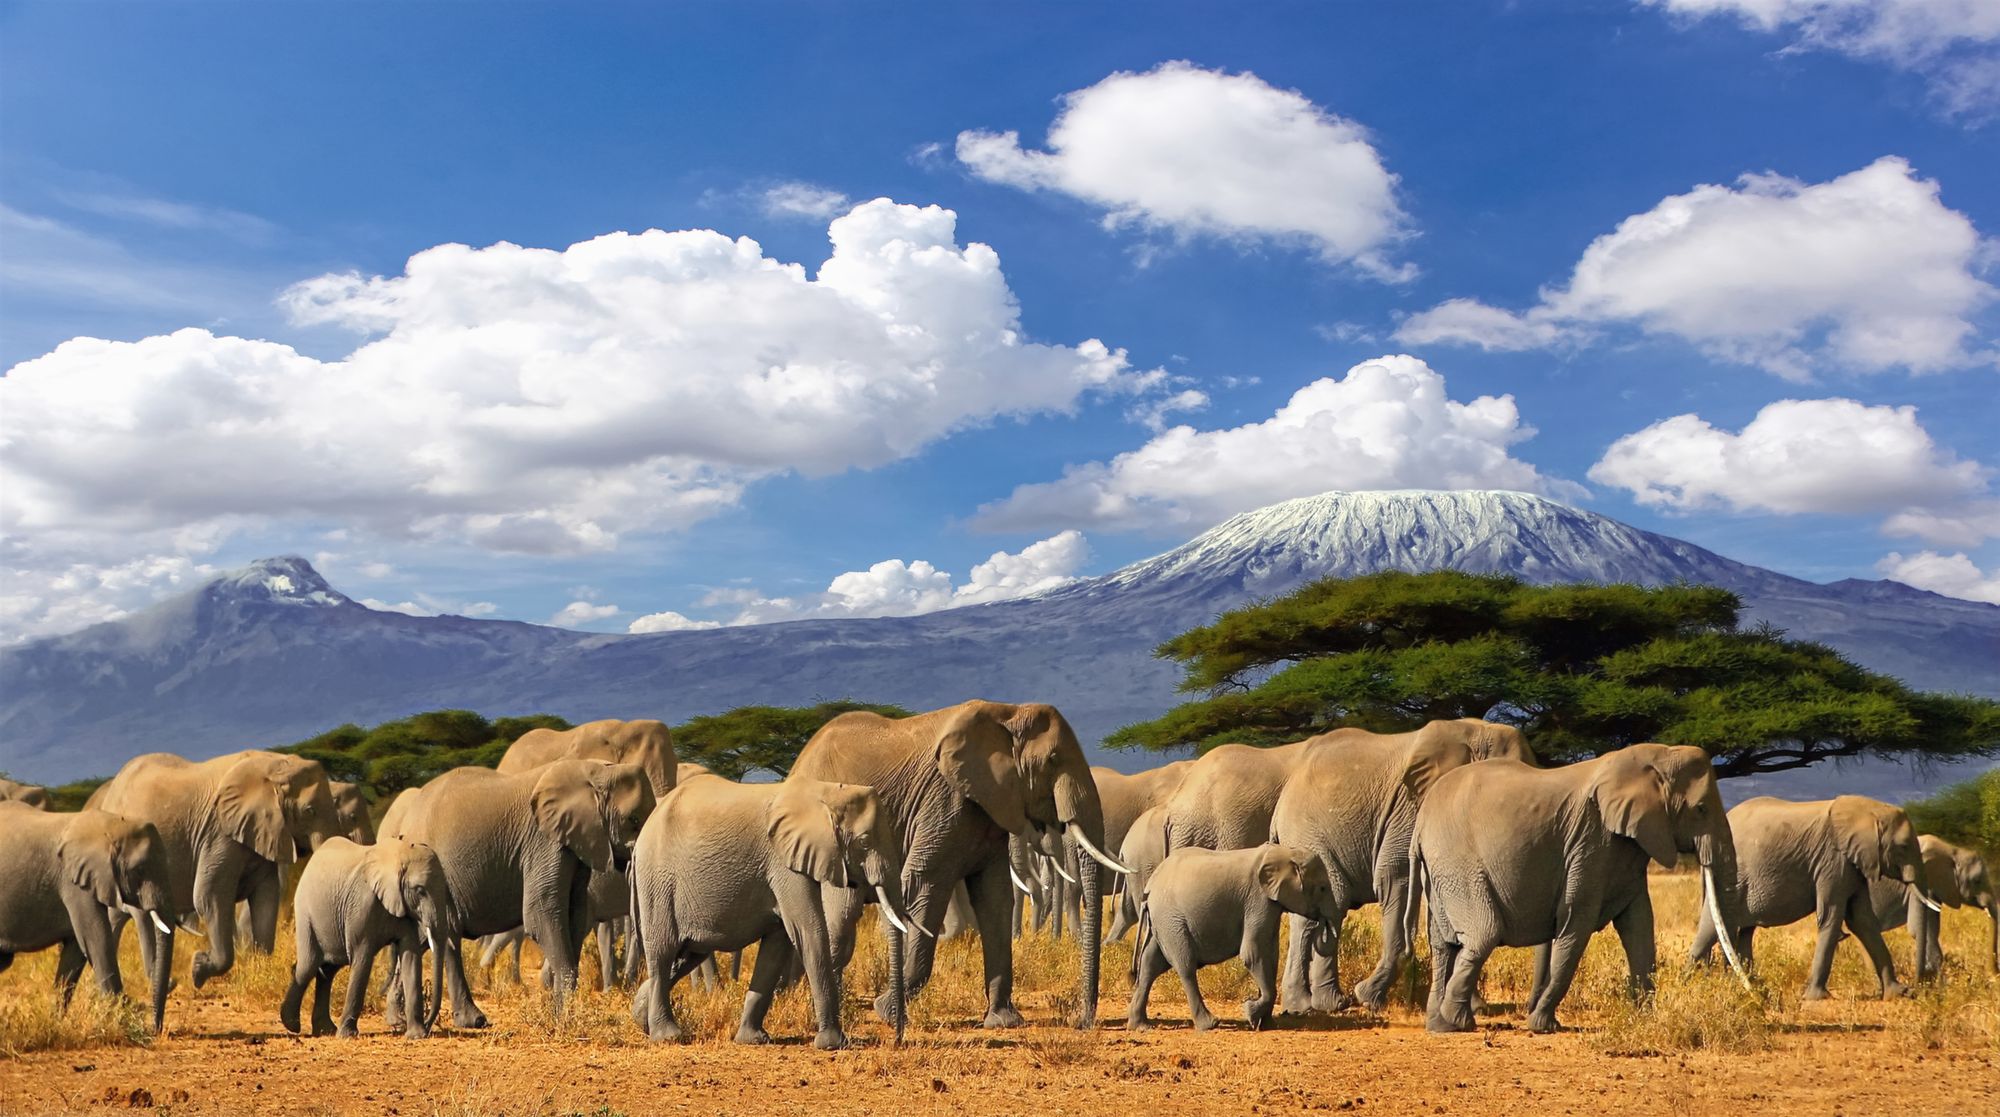 Elephants in Kenya, with Mount Kilimanjaro in the background.